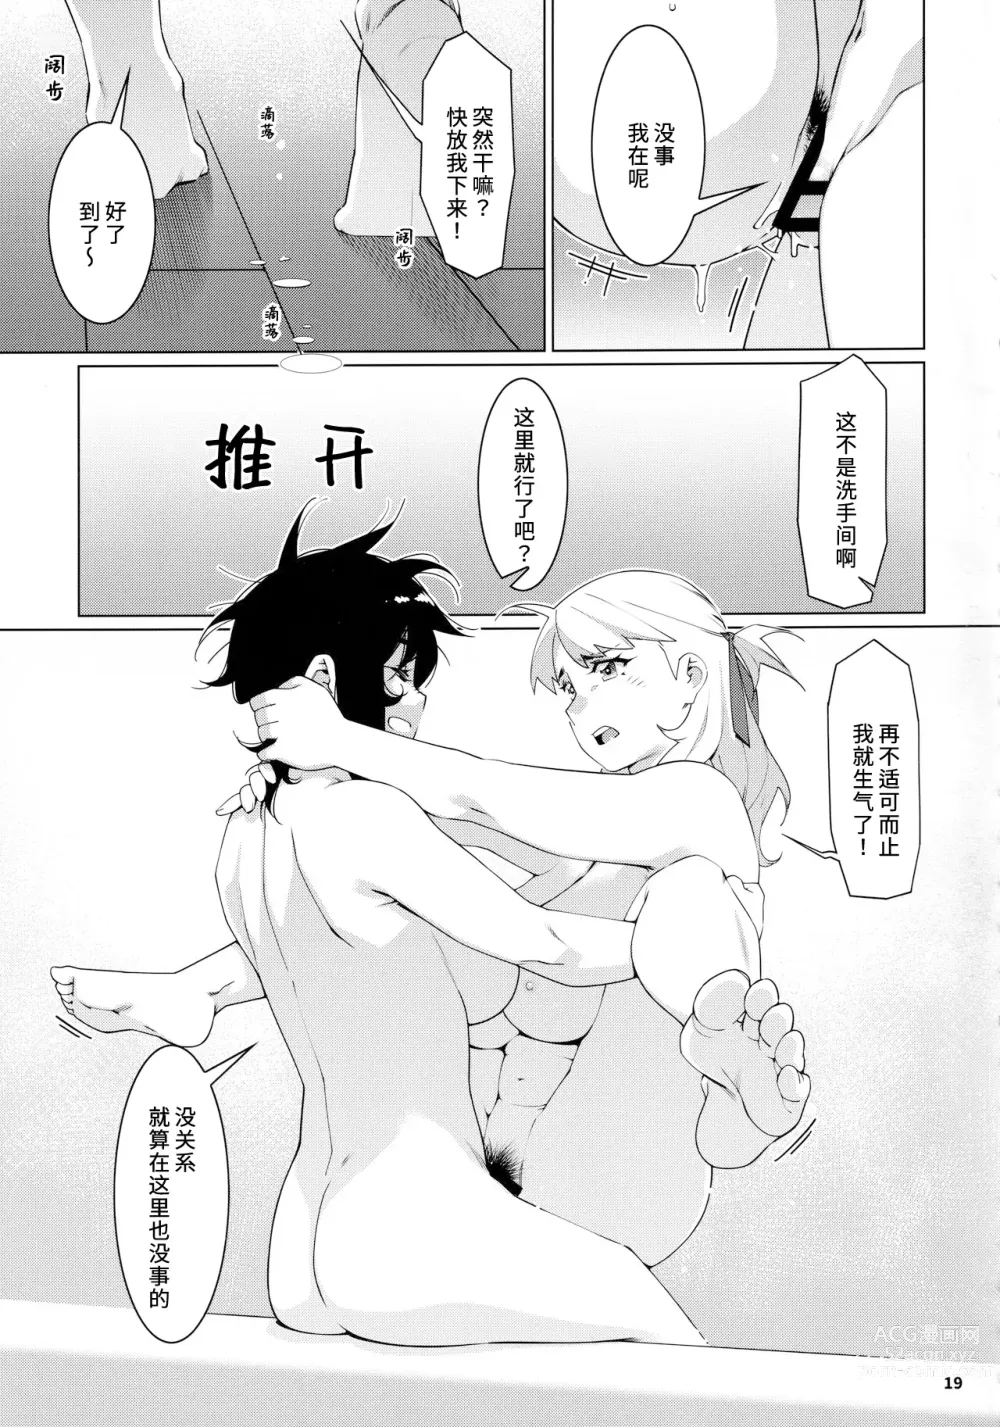 Page 19 of doujinshi Otonano Omochiya 21